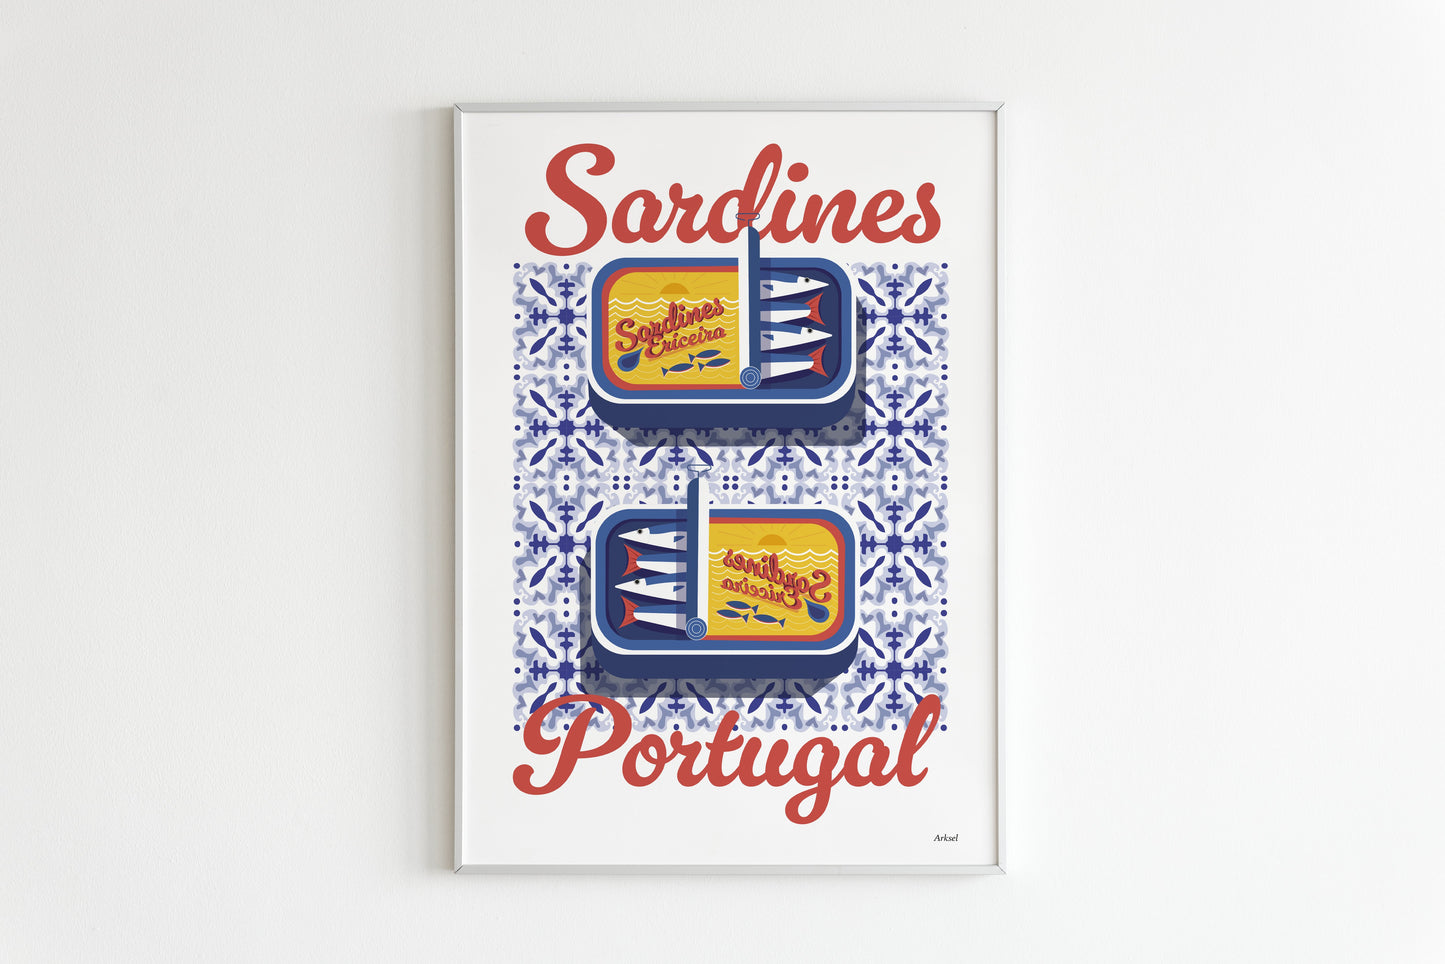 Sardines Poster